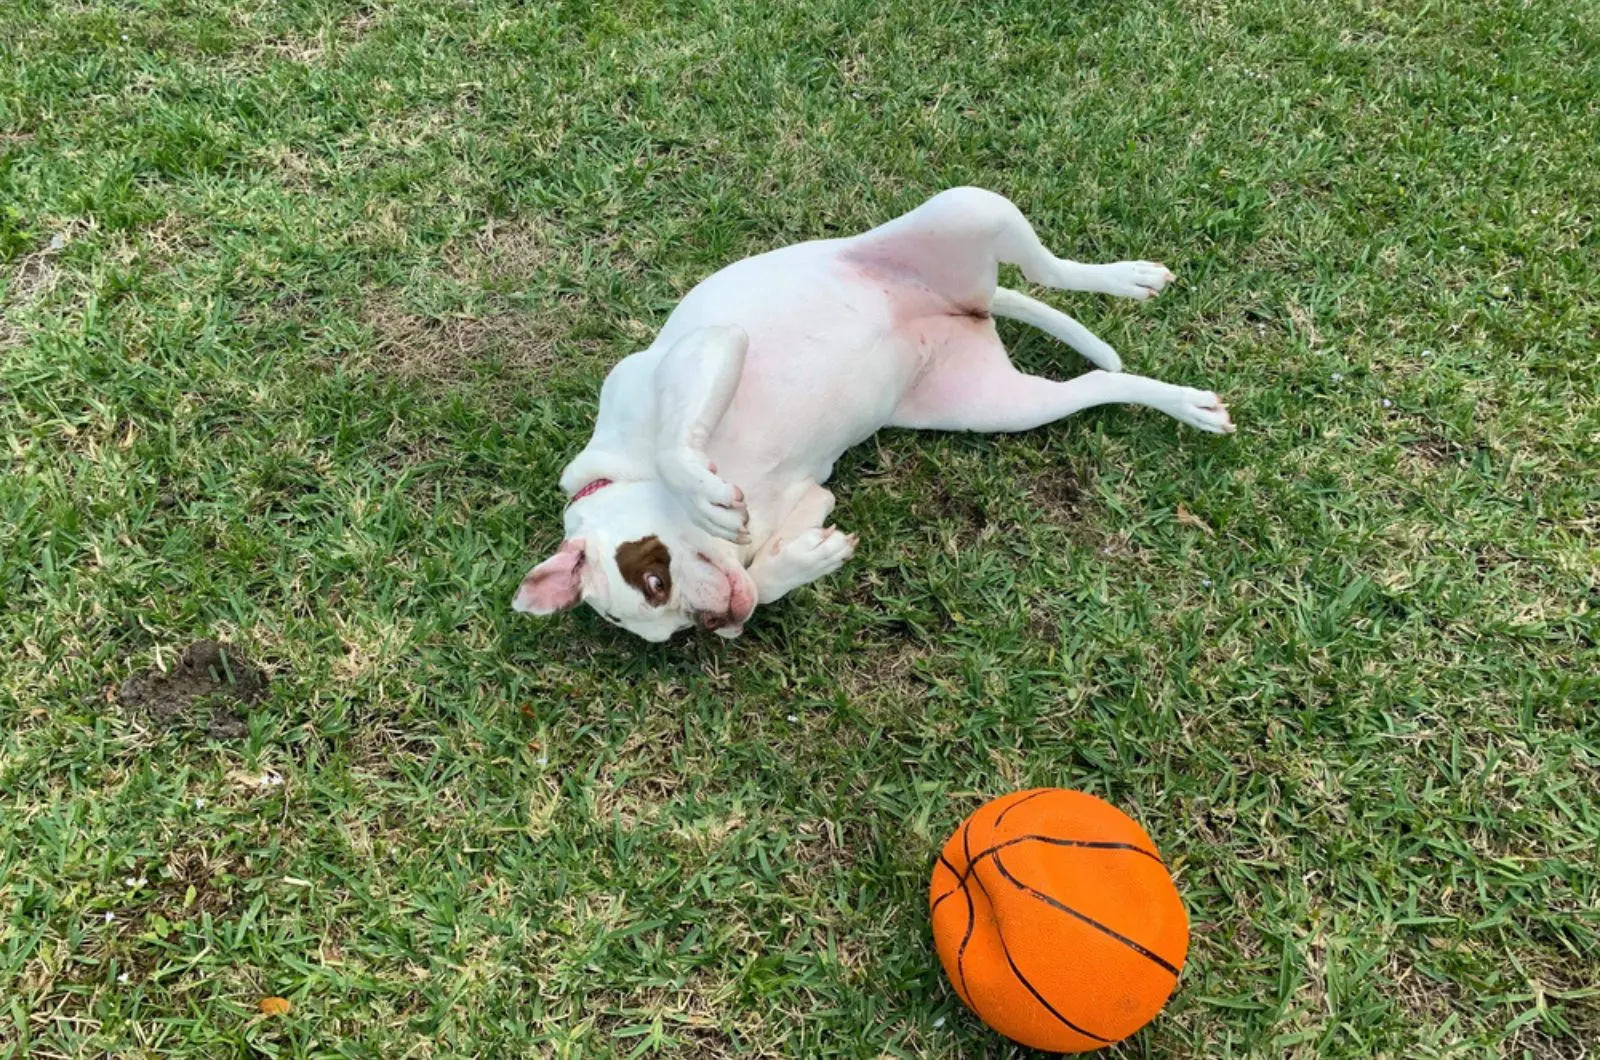 alapaha blue-blood bulldog playing with a ball